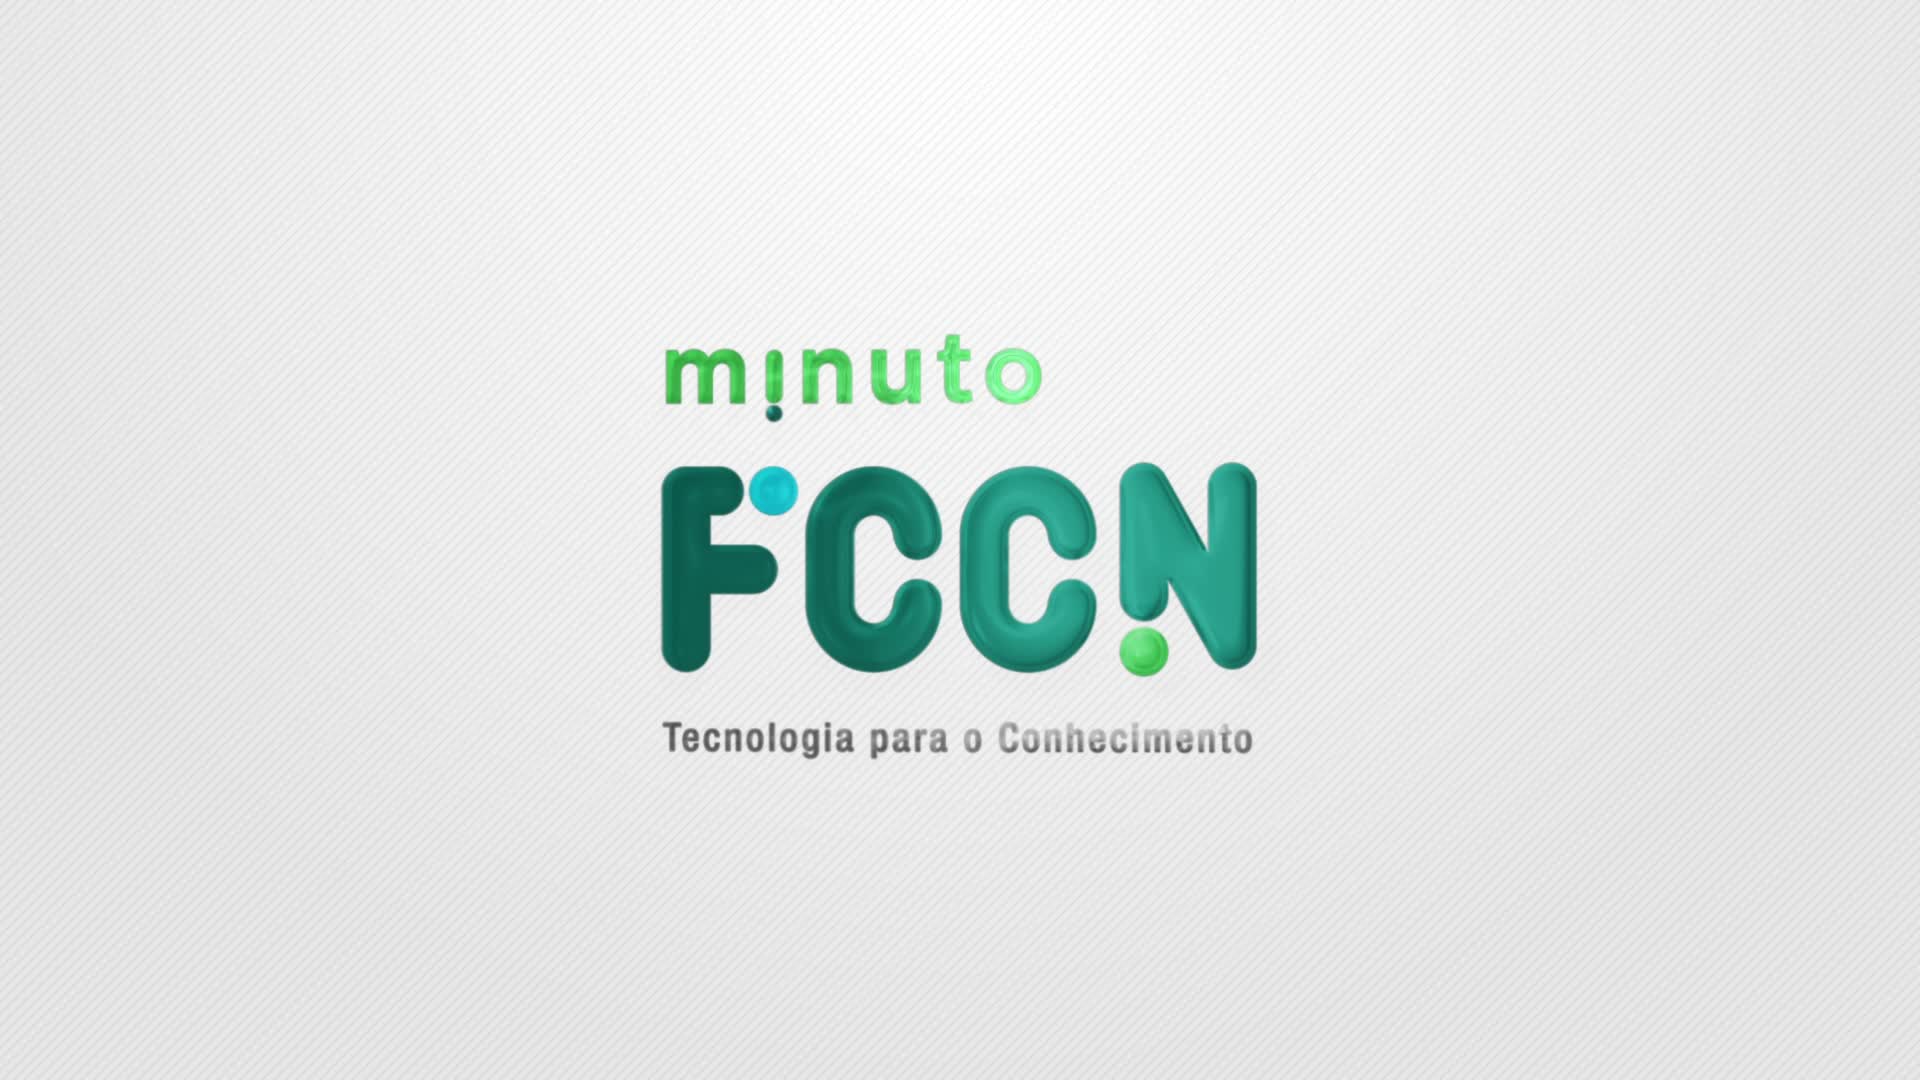  Minuto FCCN - Memorial Arquivo.pt